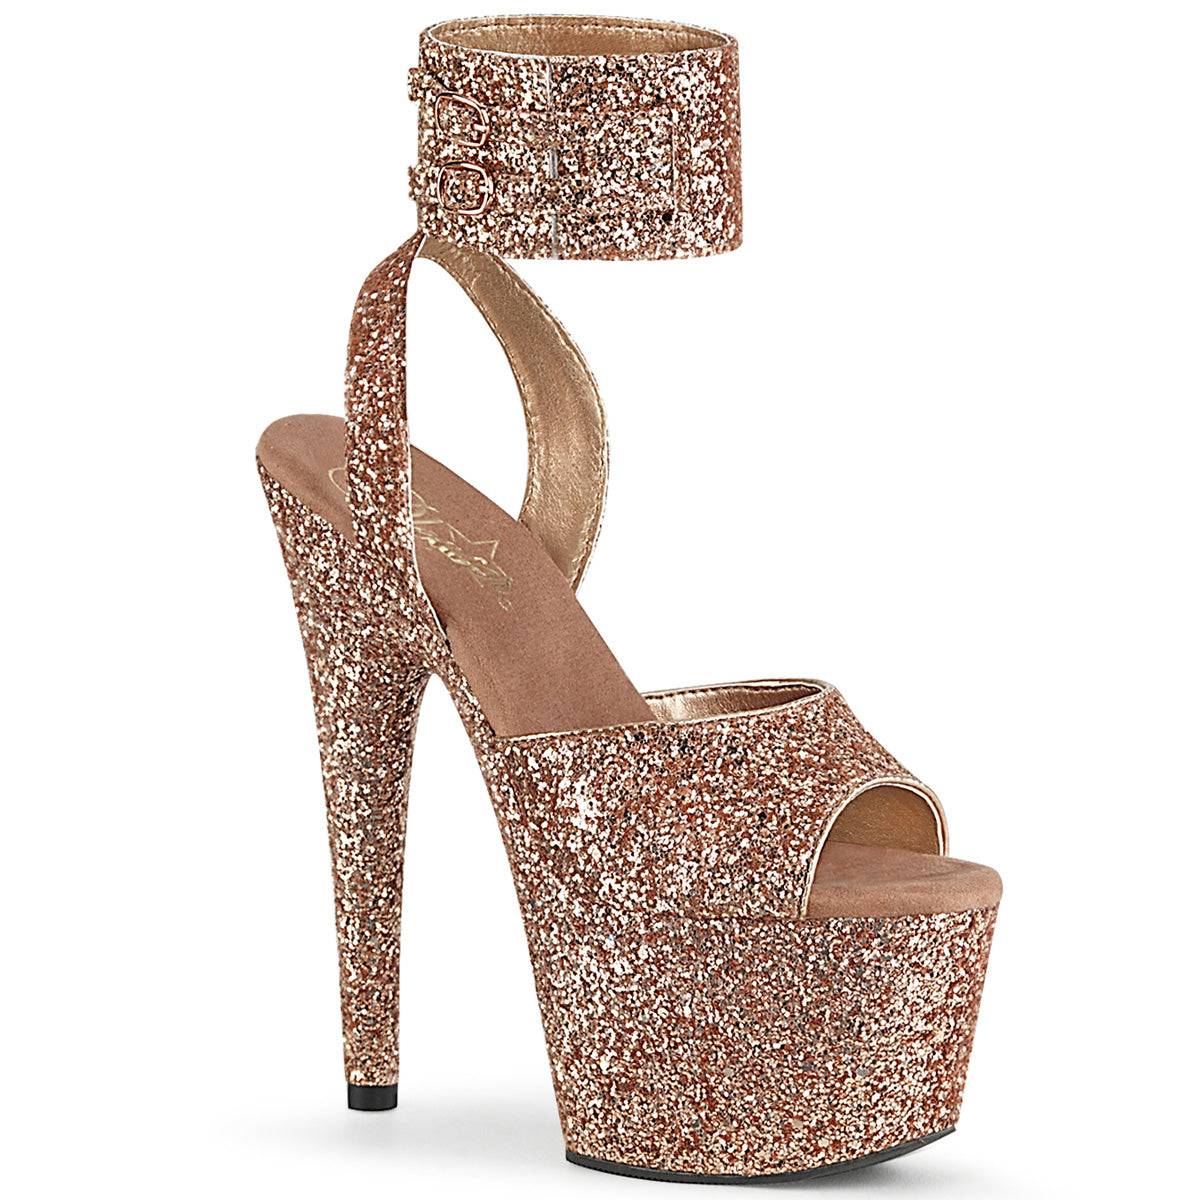 Pleaser Womens Sandals ADORE-791LG Rose Gold Glitter/Rose Gold Glitter